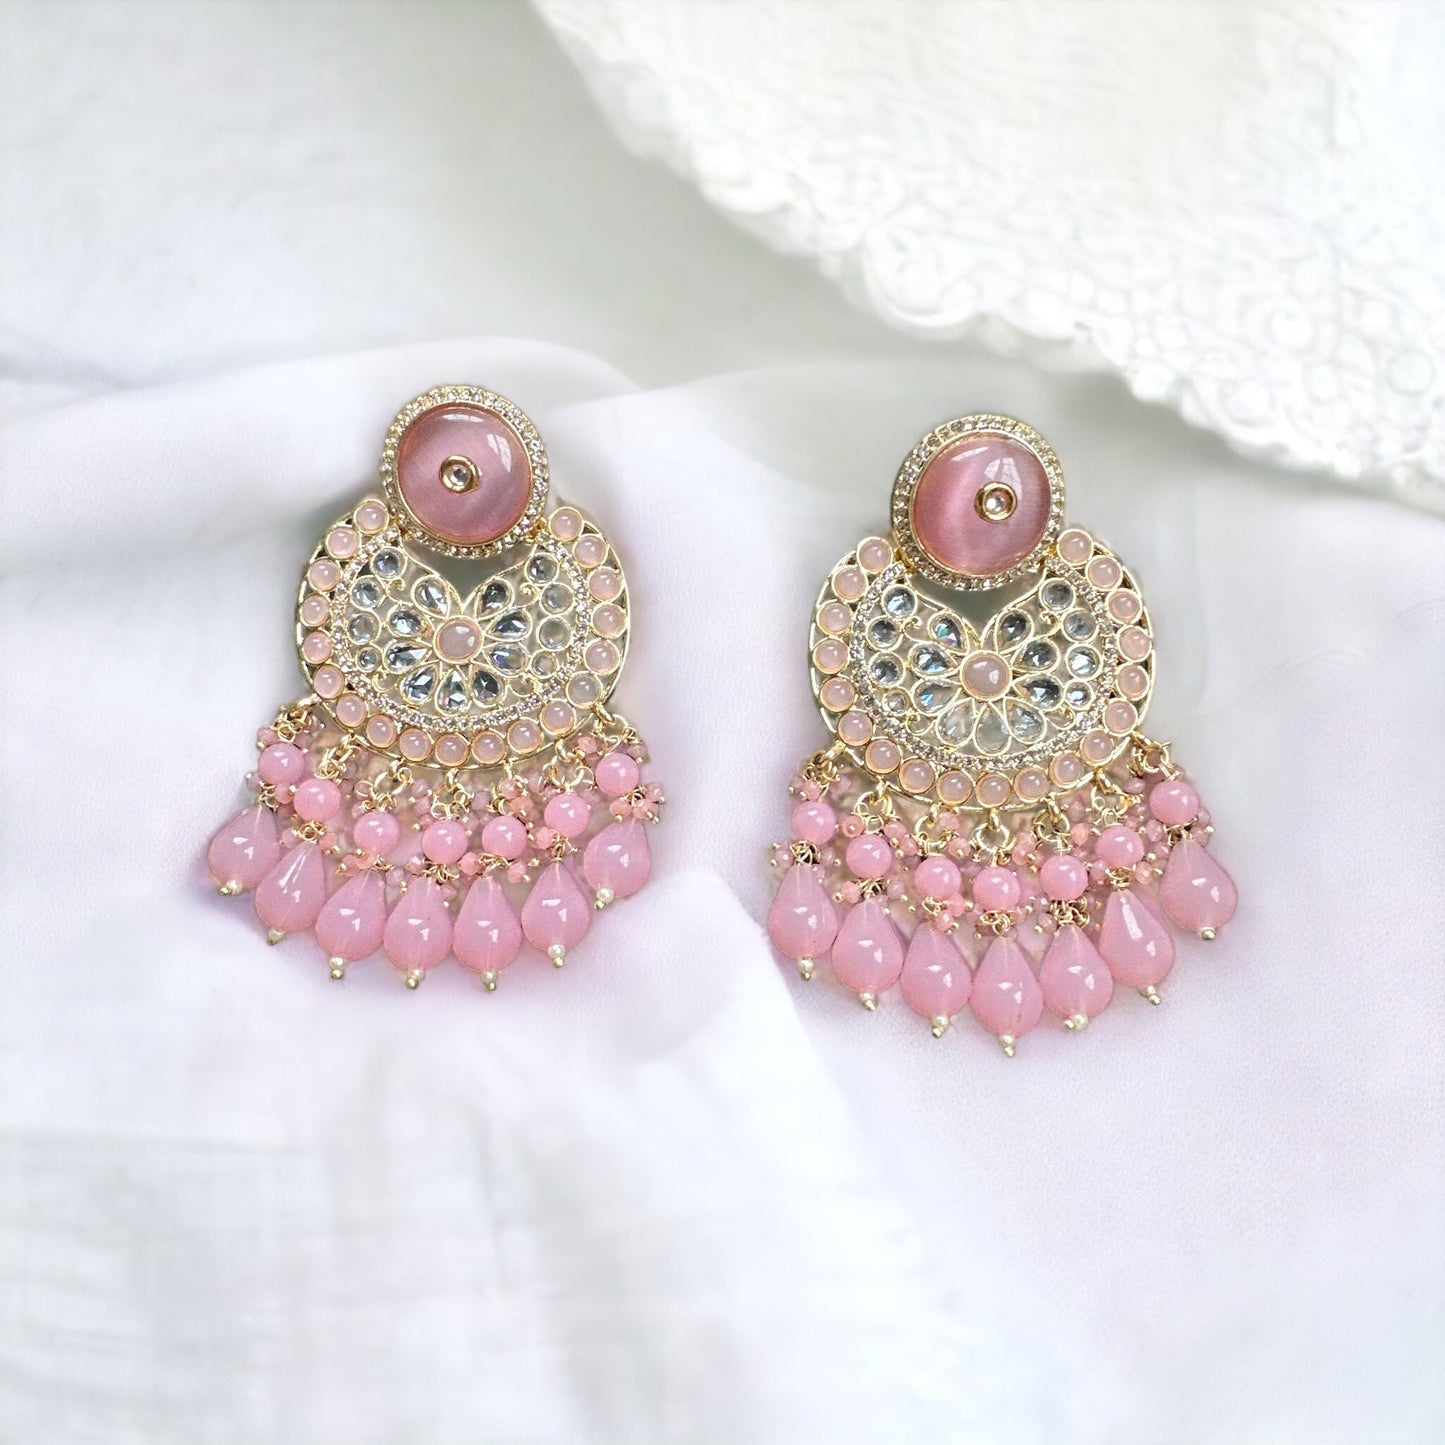 Kundan Pink Earrings/Reception earrings/Bollywood Jewelry/mirror polki earrings/Semi precious stone earrings/indian jhumka/Unique earrings